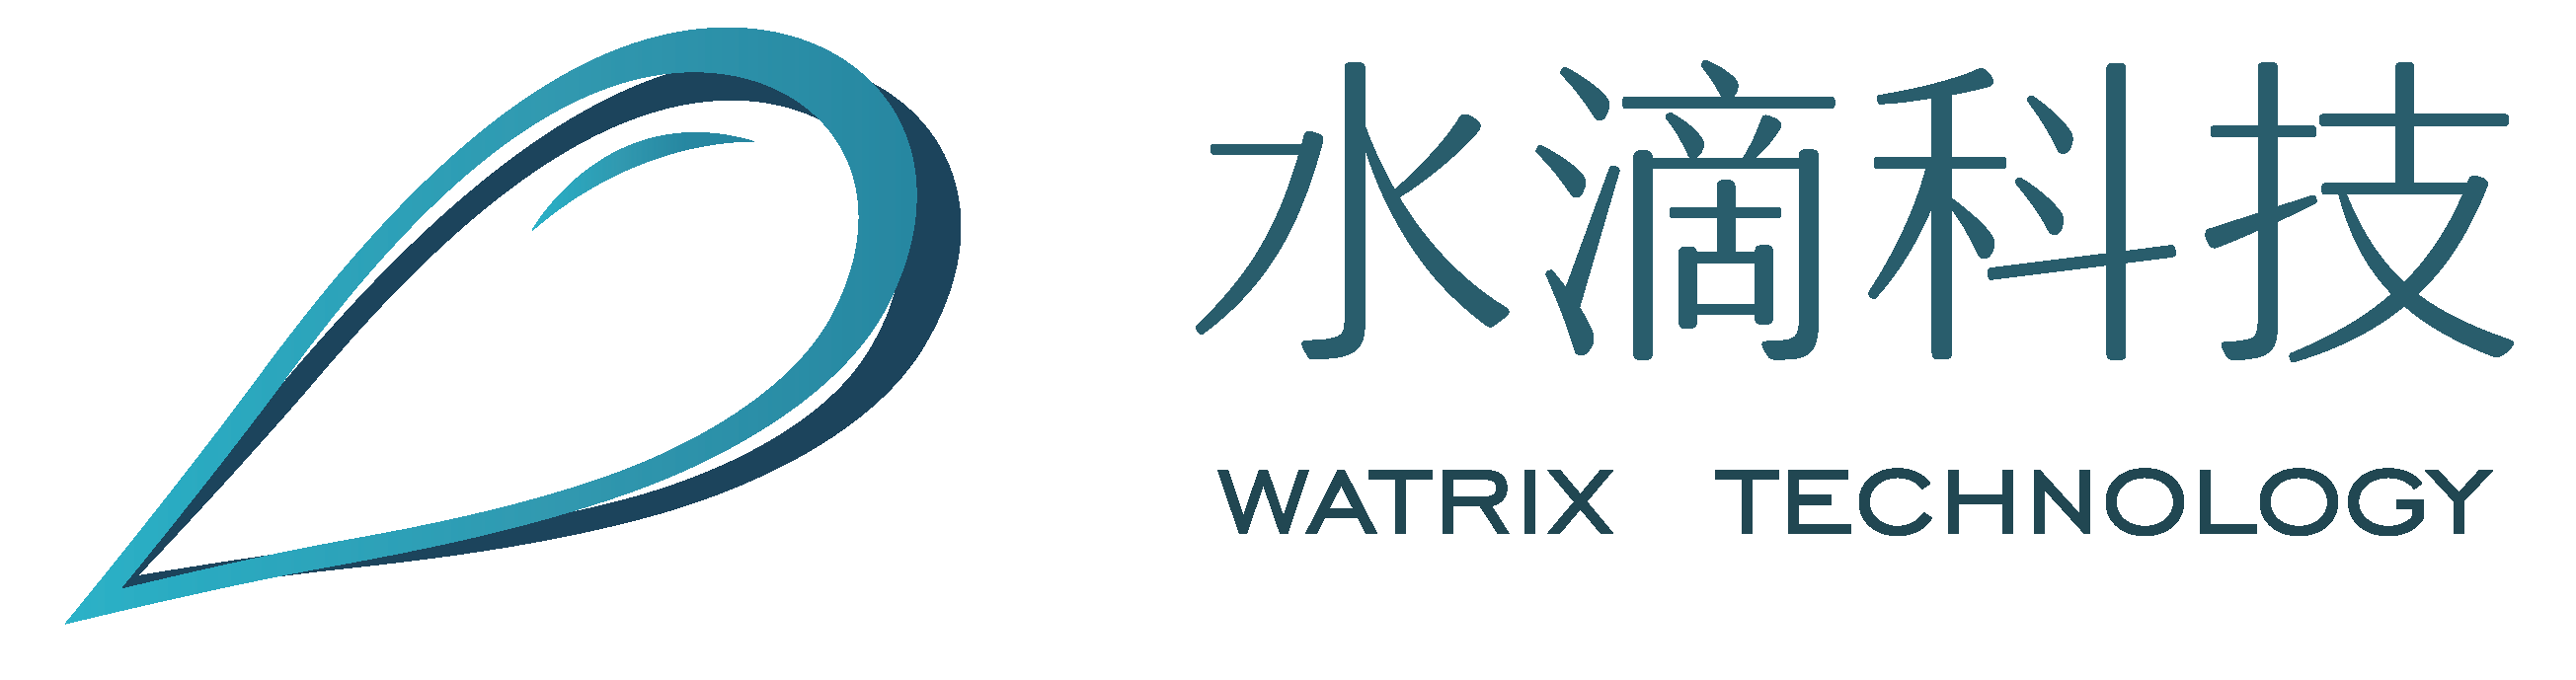 sponsor-watrix